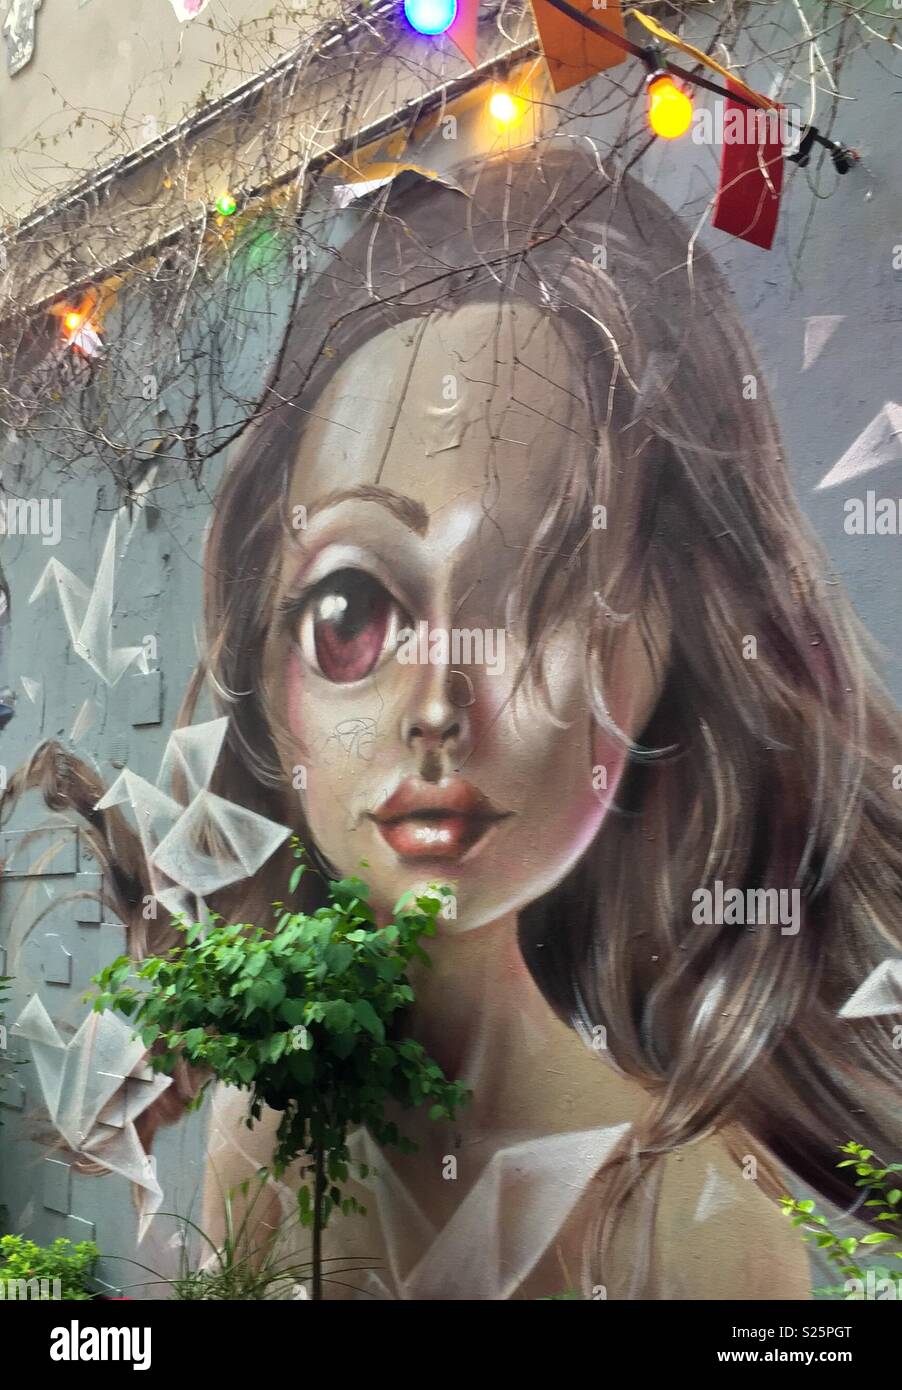 Female Face on the Wall: Street Art, Graffiti, Berlin Stock Photo